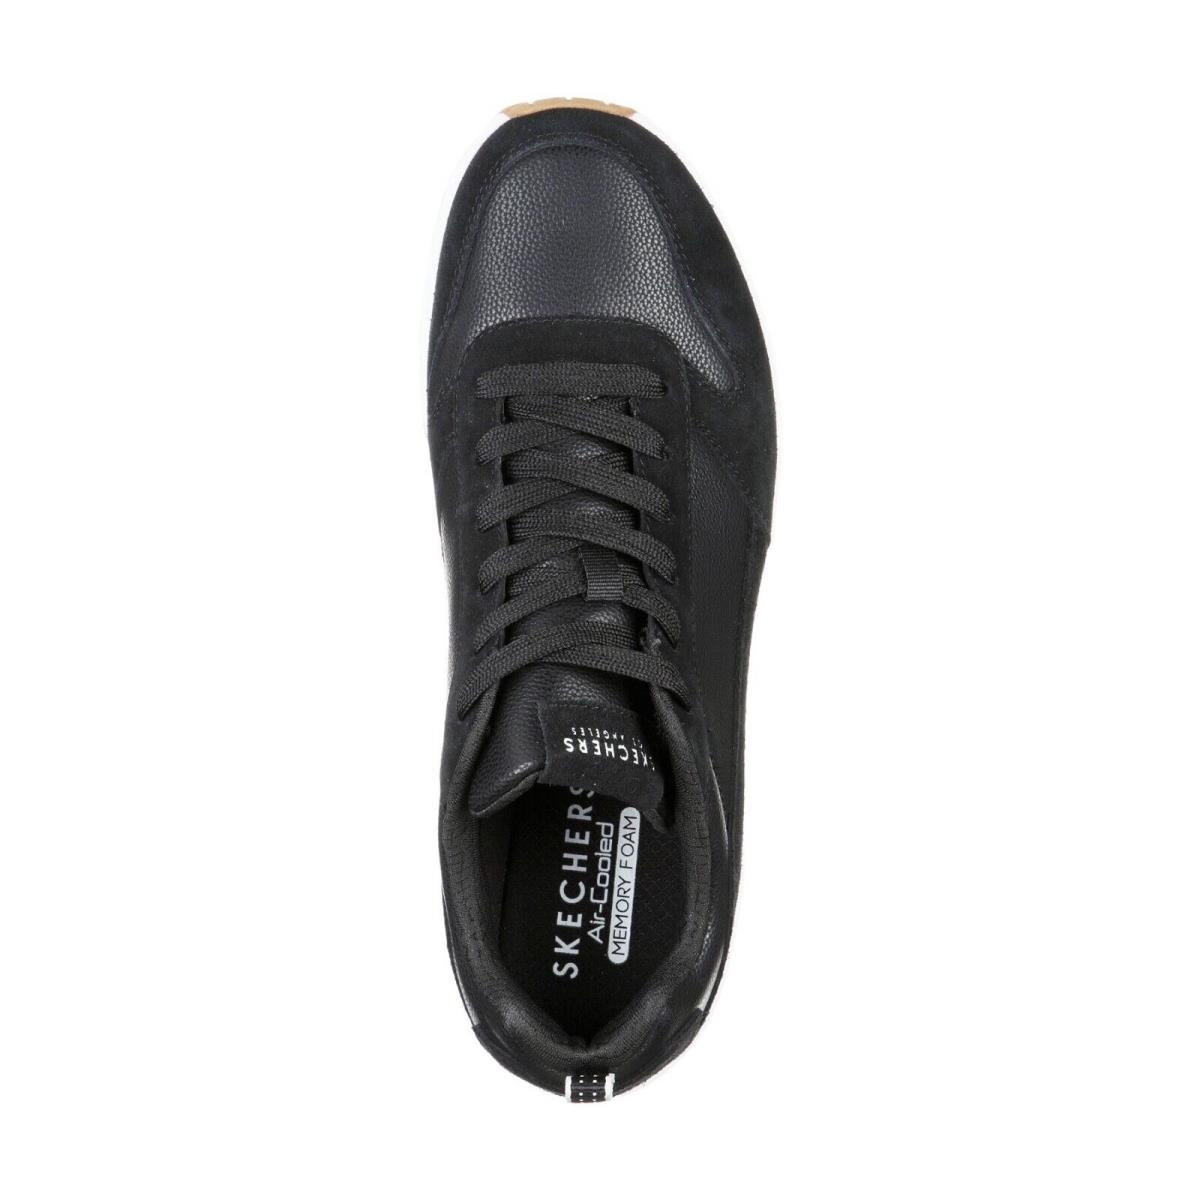 Skechers shoes Uno Stacre - Black/White 5